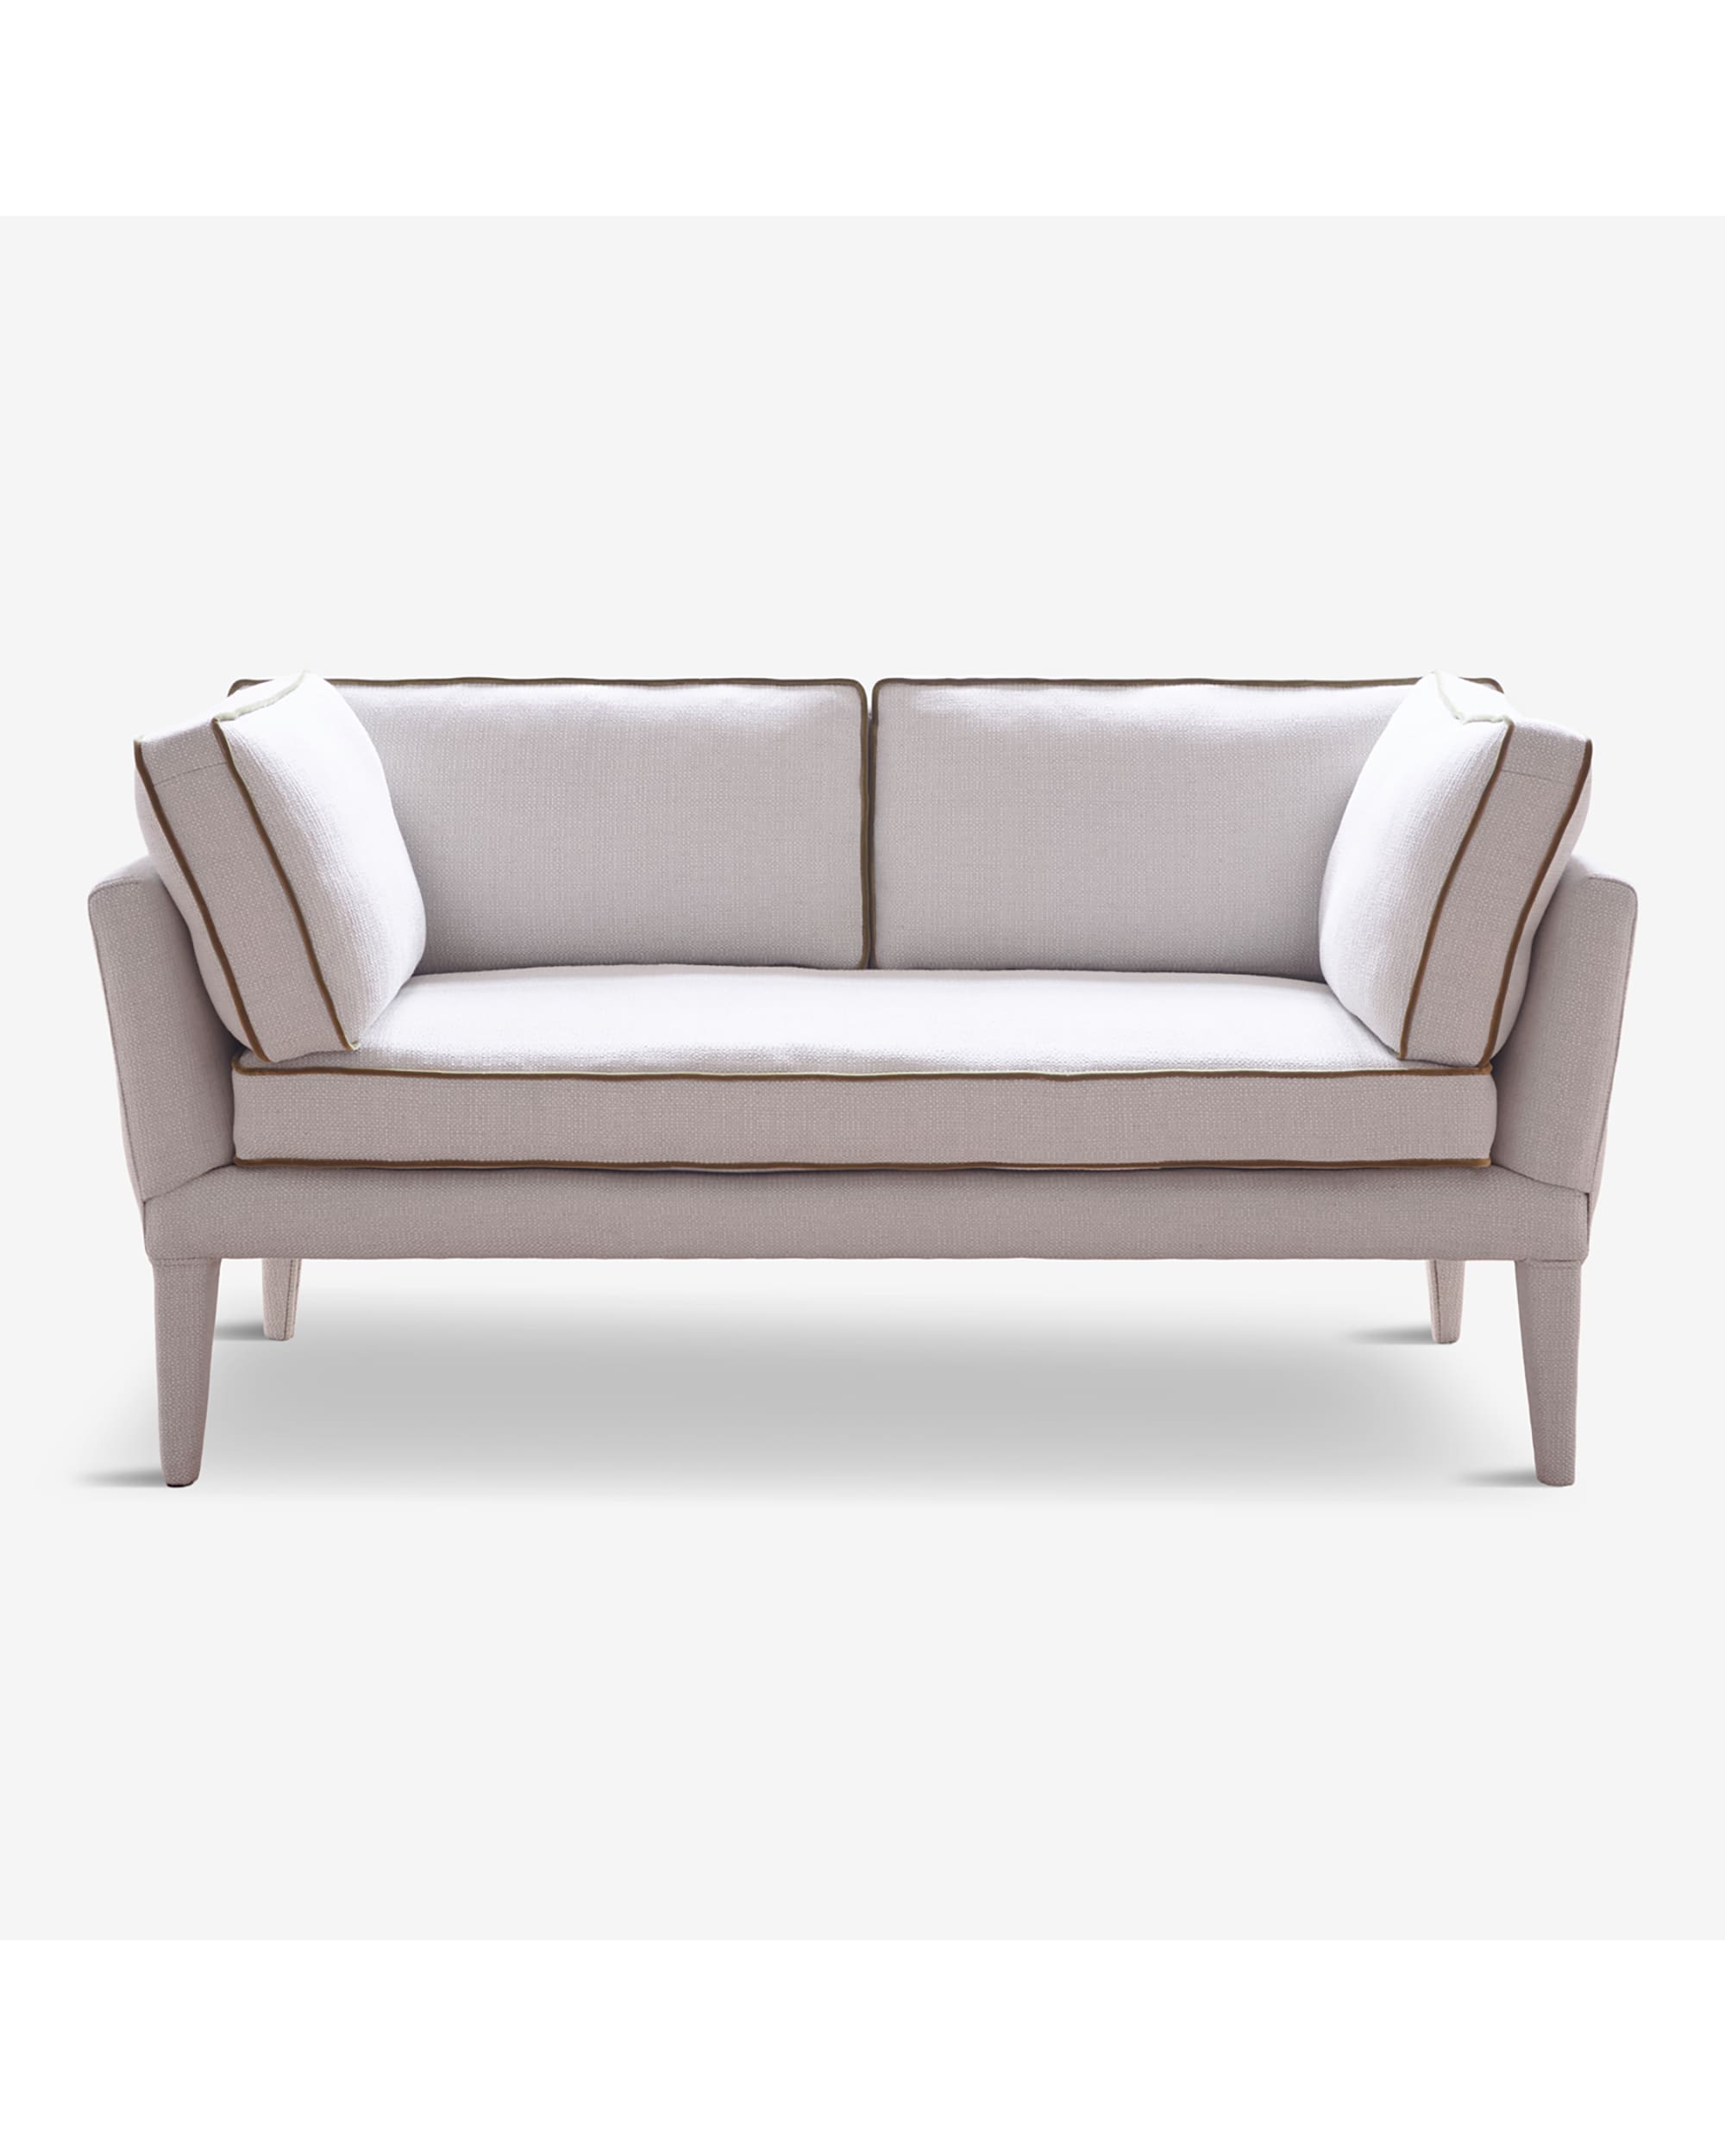 Stellina sofa